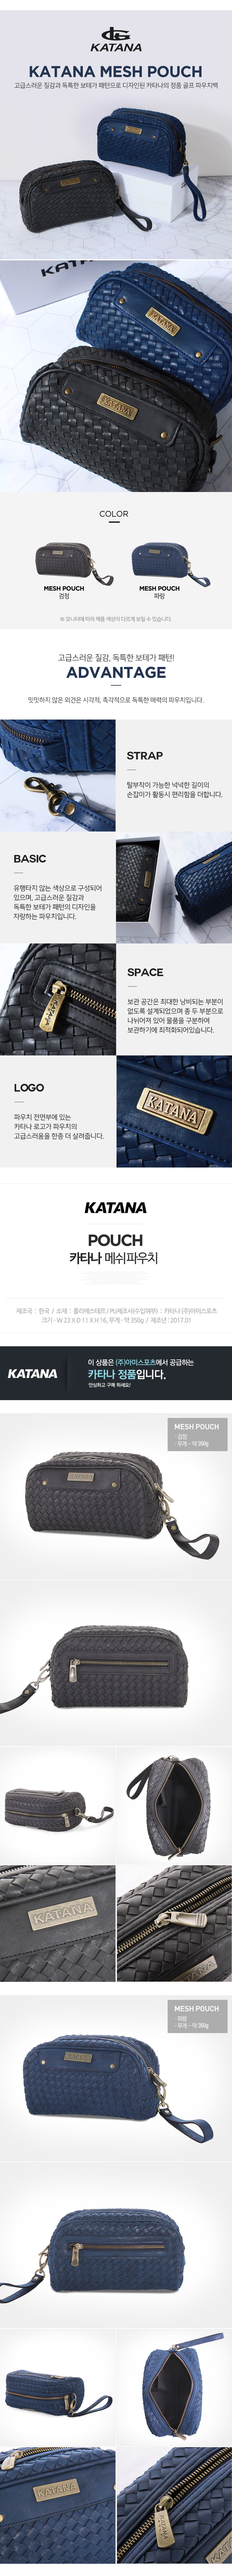 katana_2017_mesh_pouch.jpg